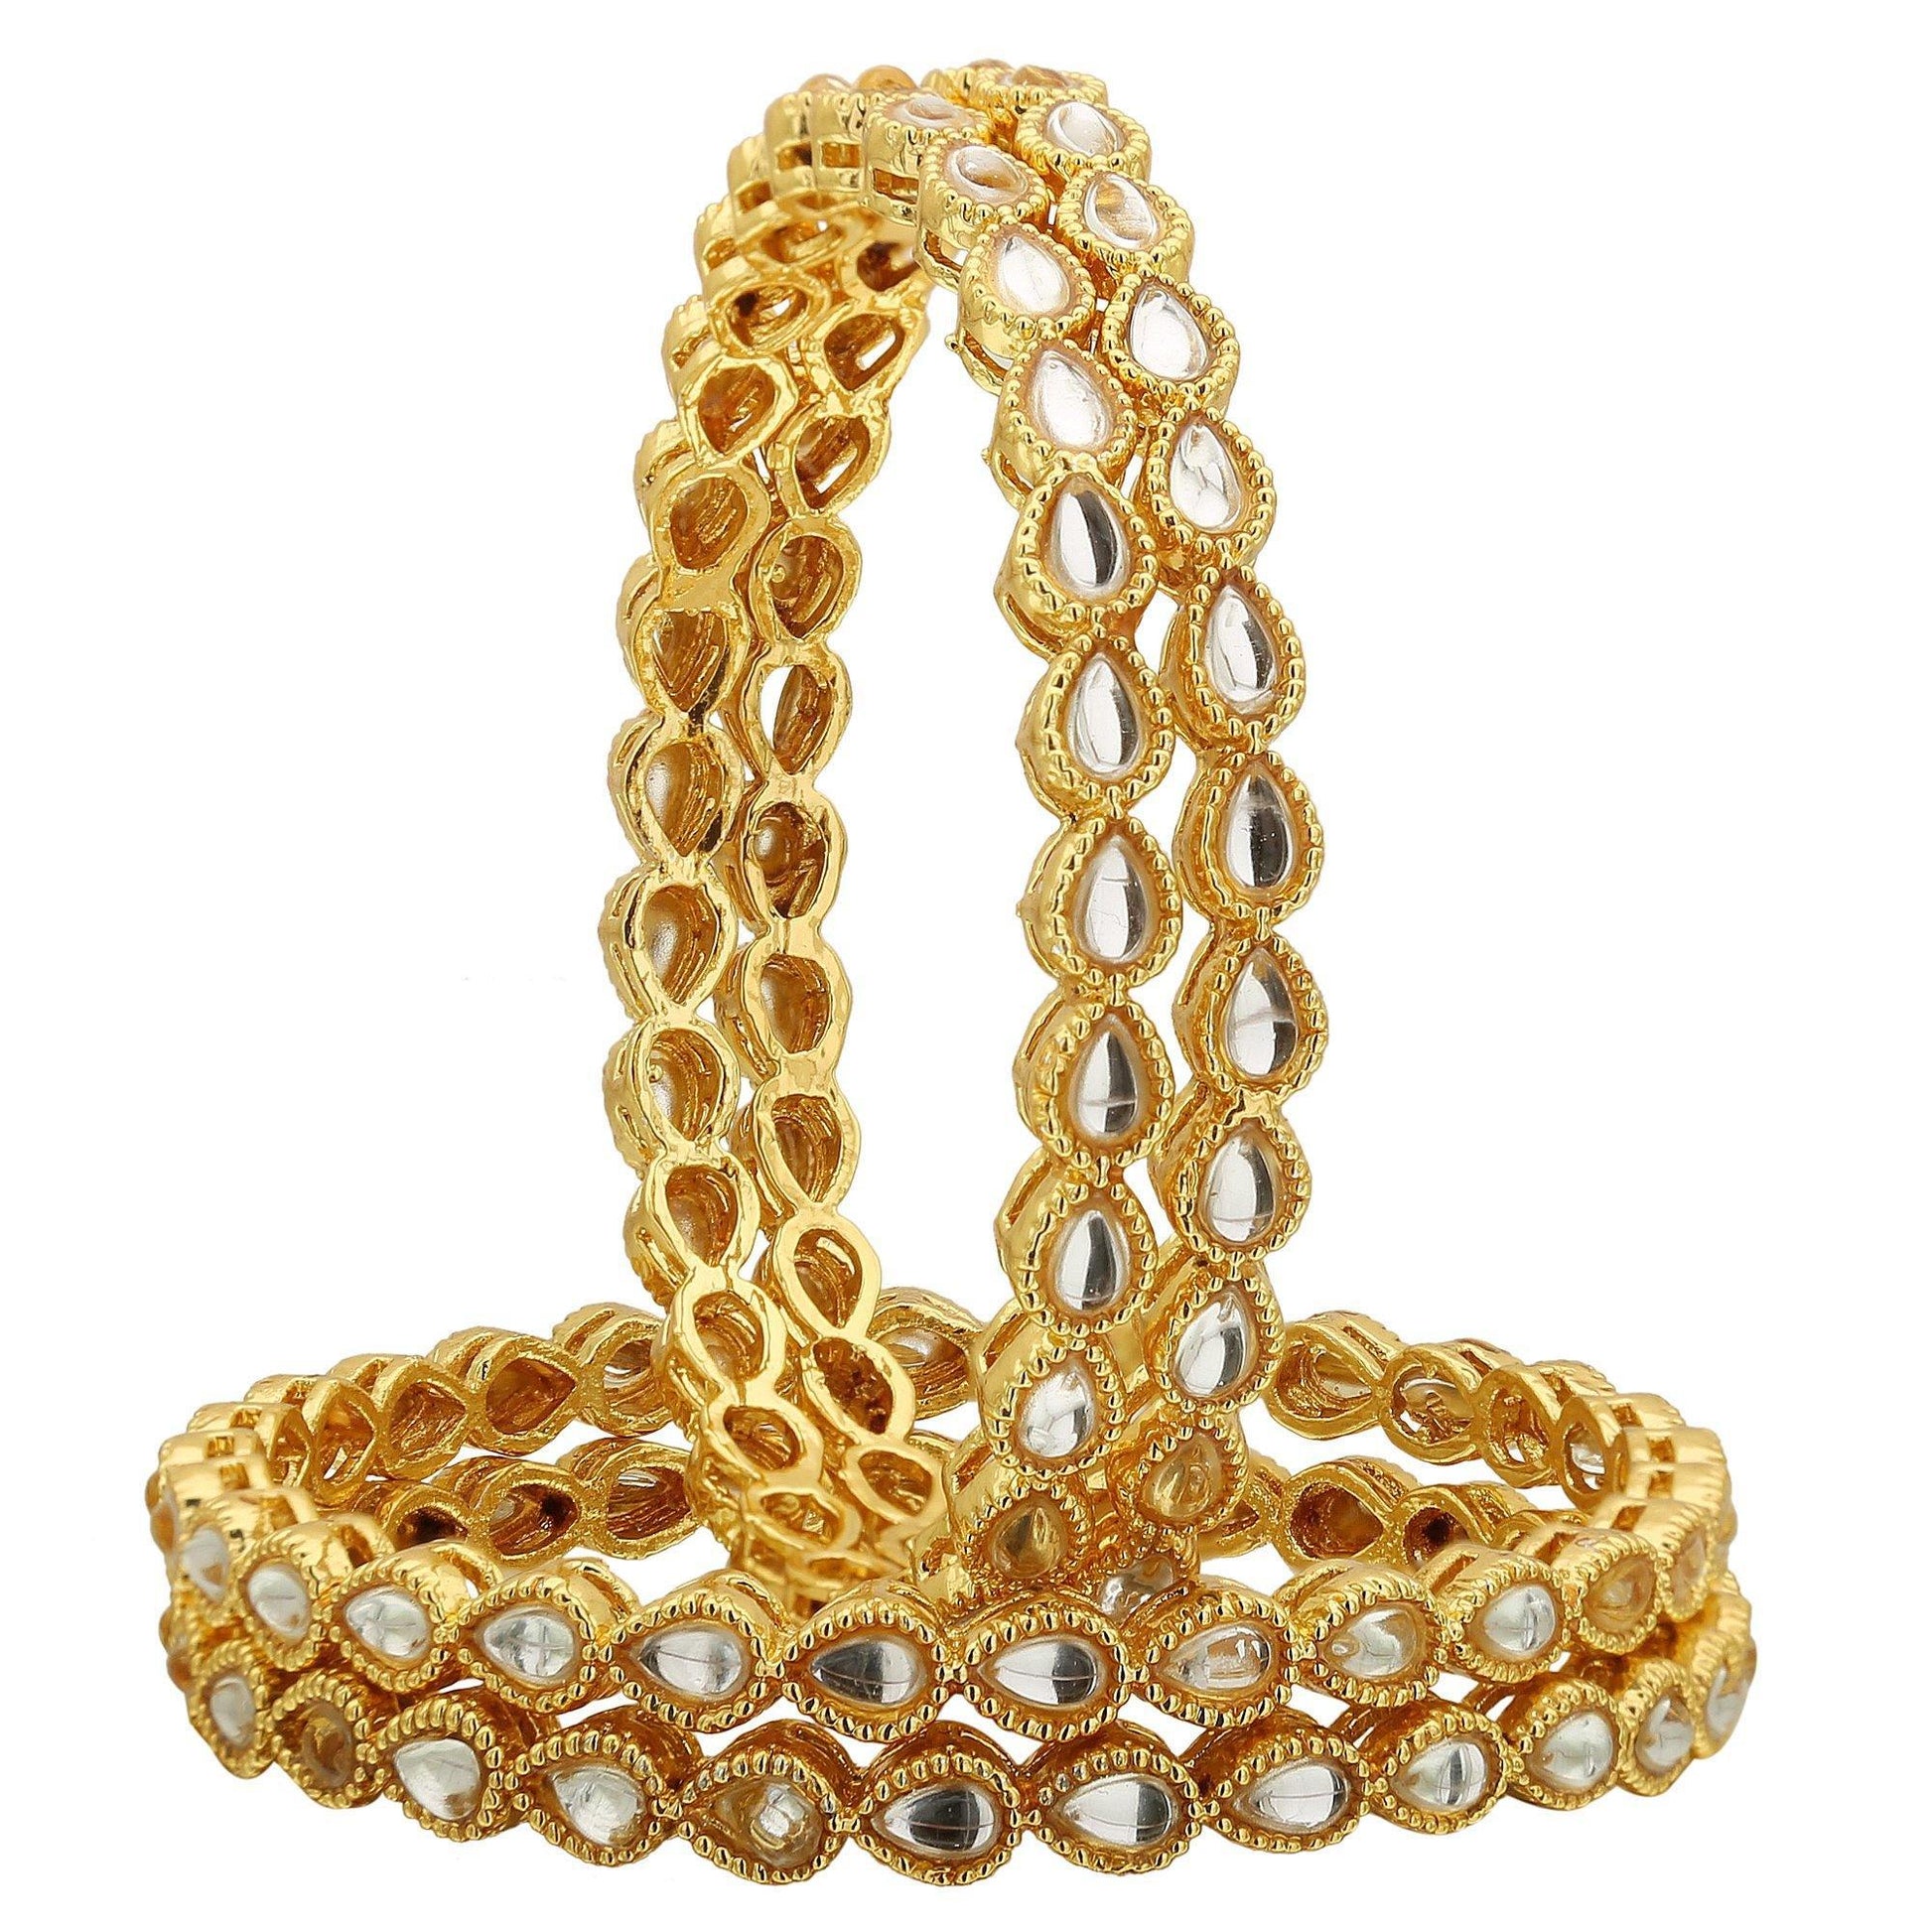 sukriti indian ethnic royal gold plated kundan bangles wedding jewelry for women & girls - set of 4